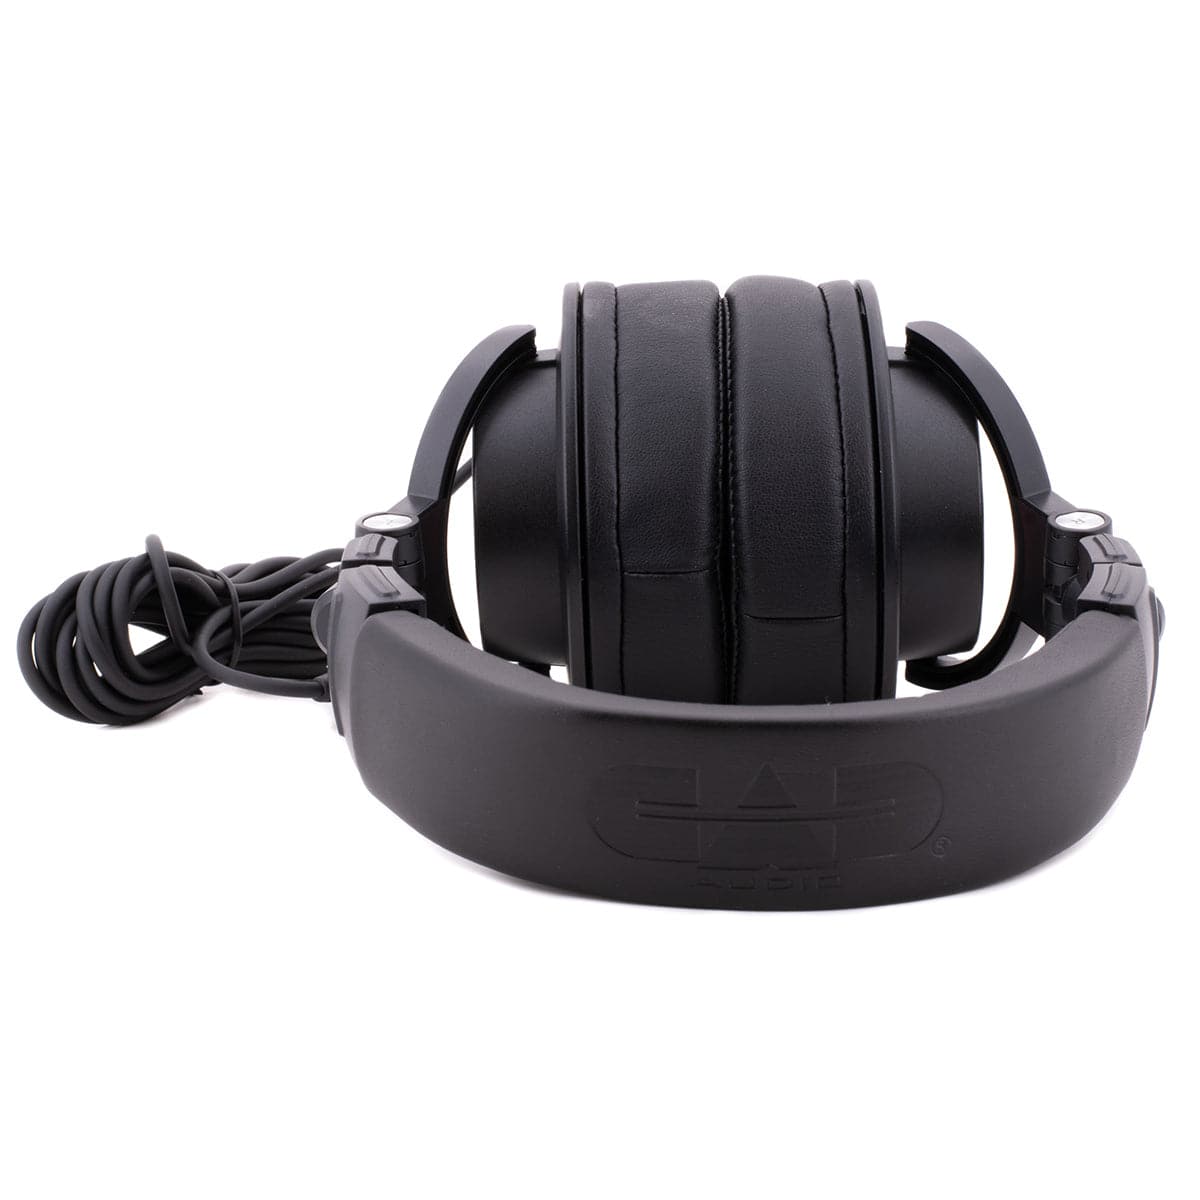 CAD Sessions Headphones ~ Black